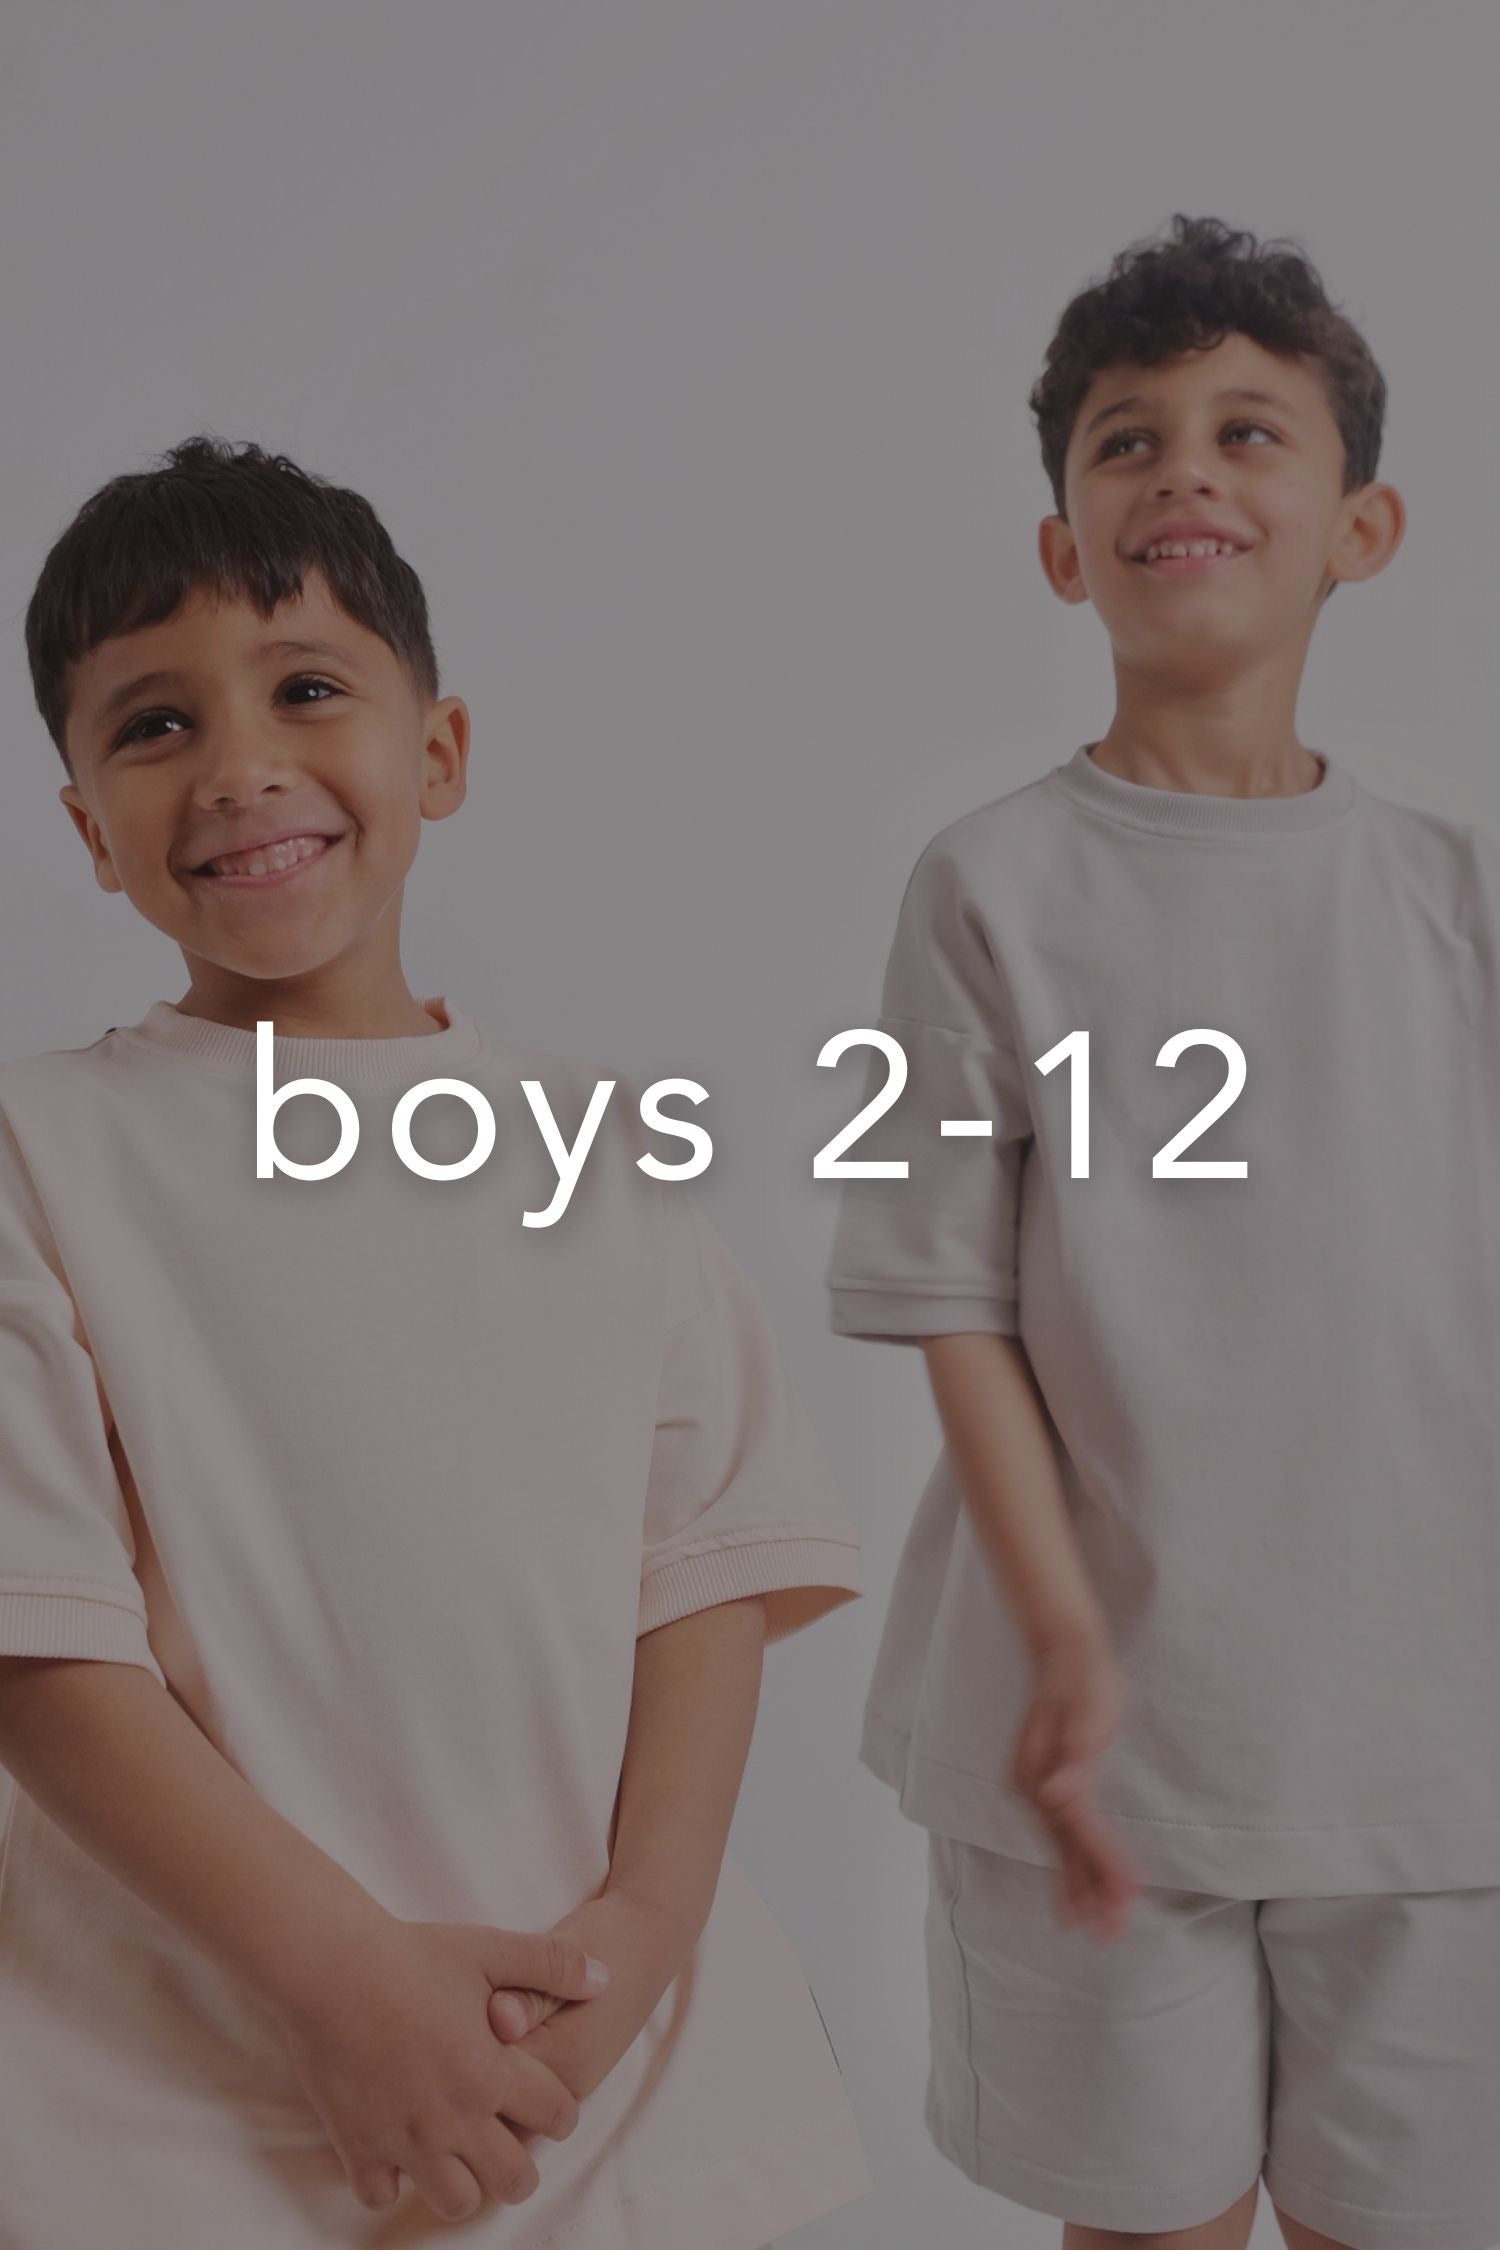 Boys 2-12